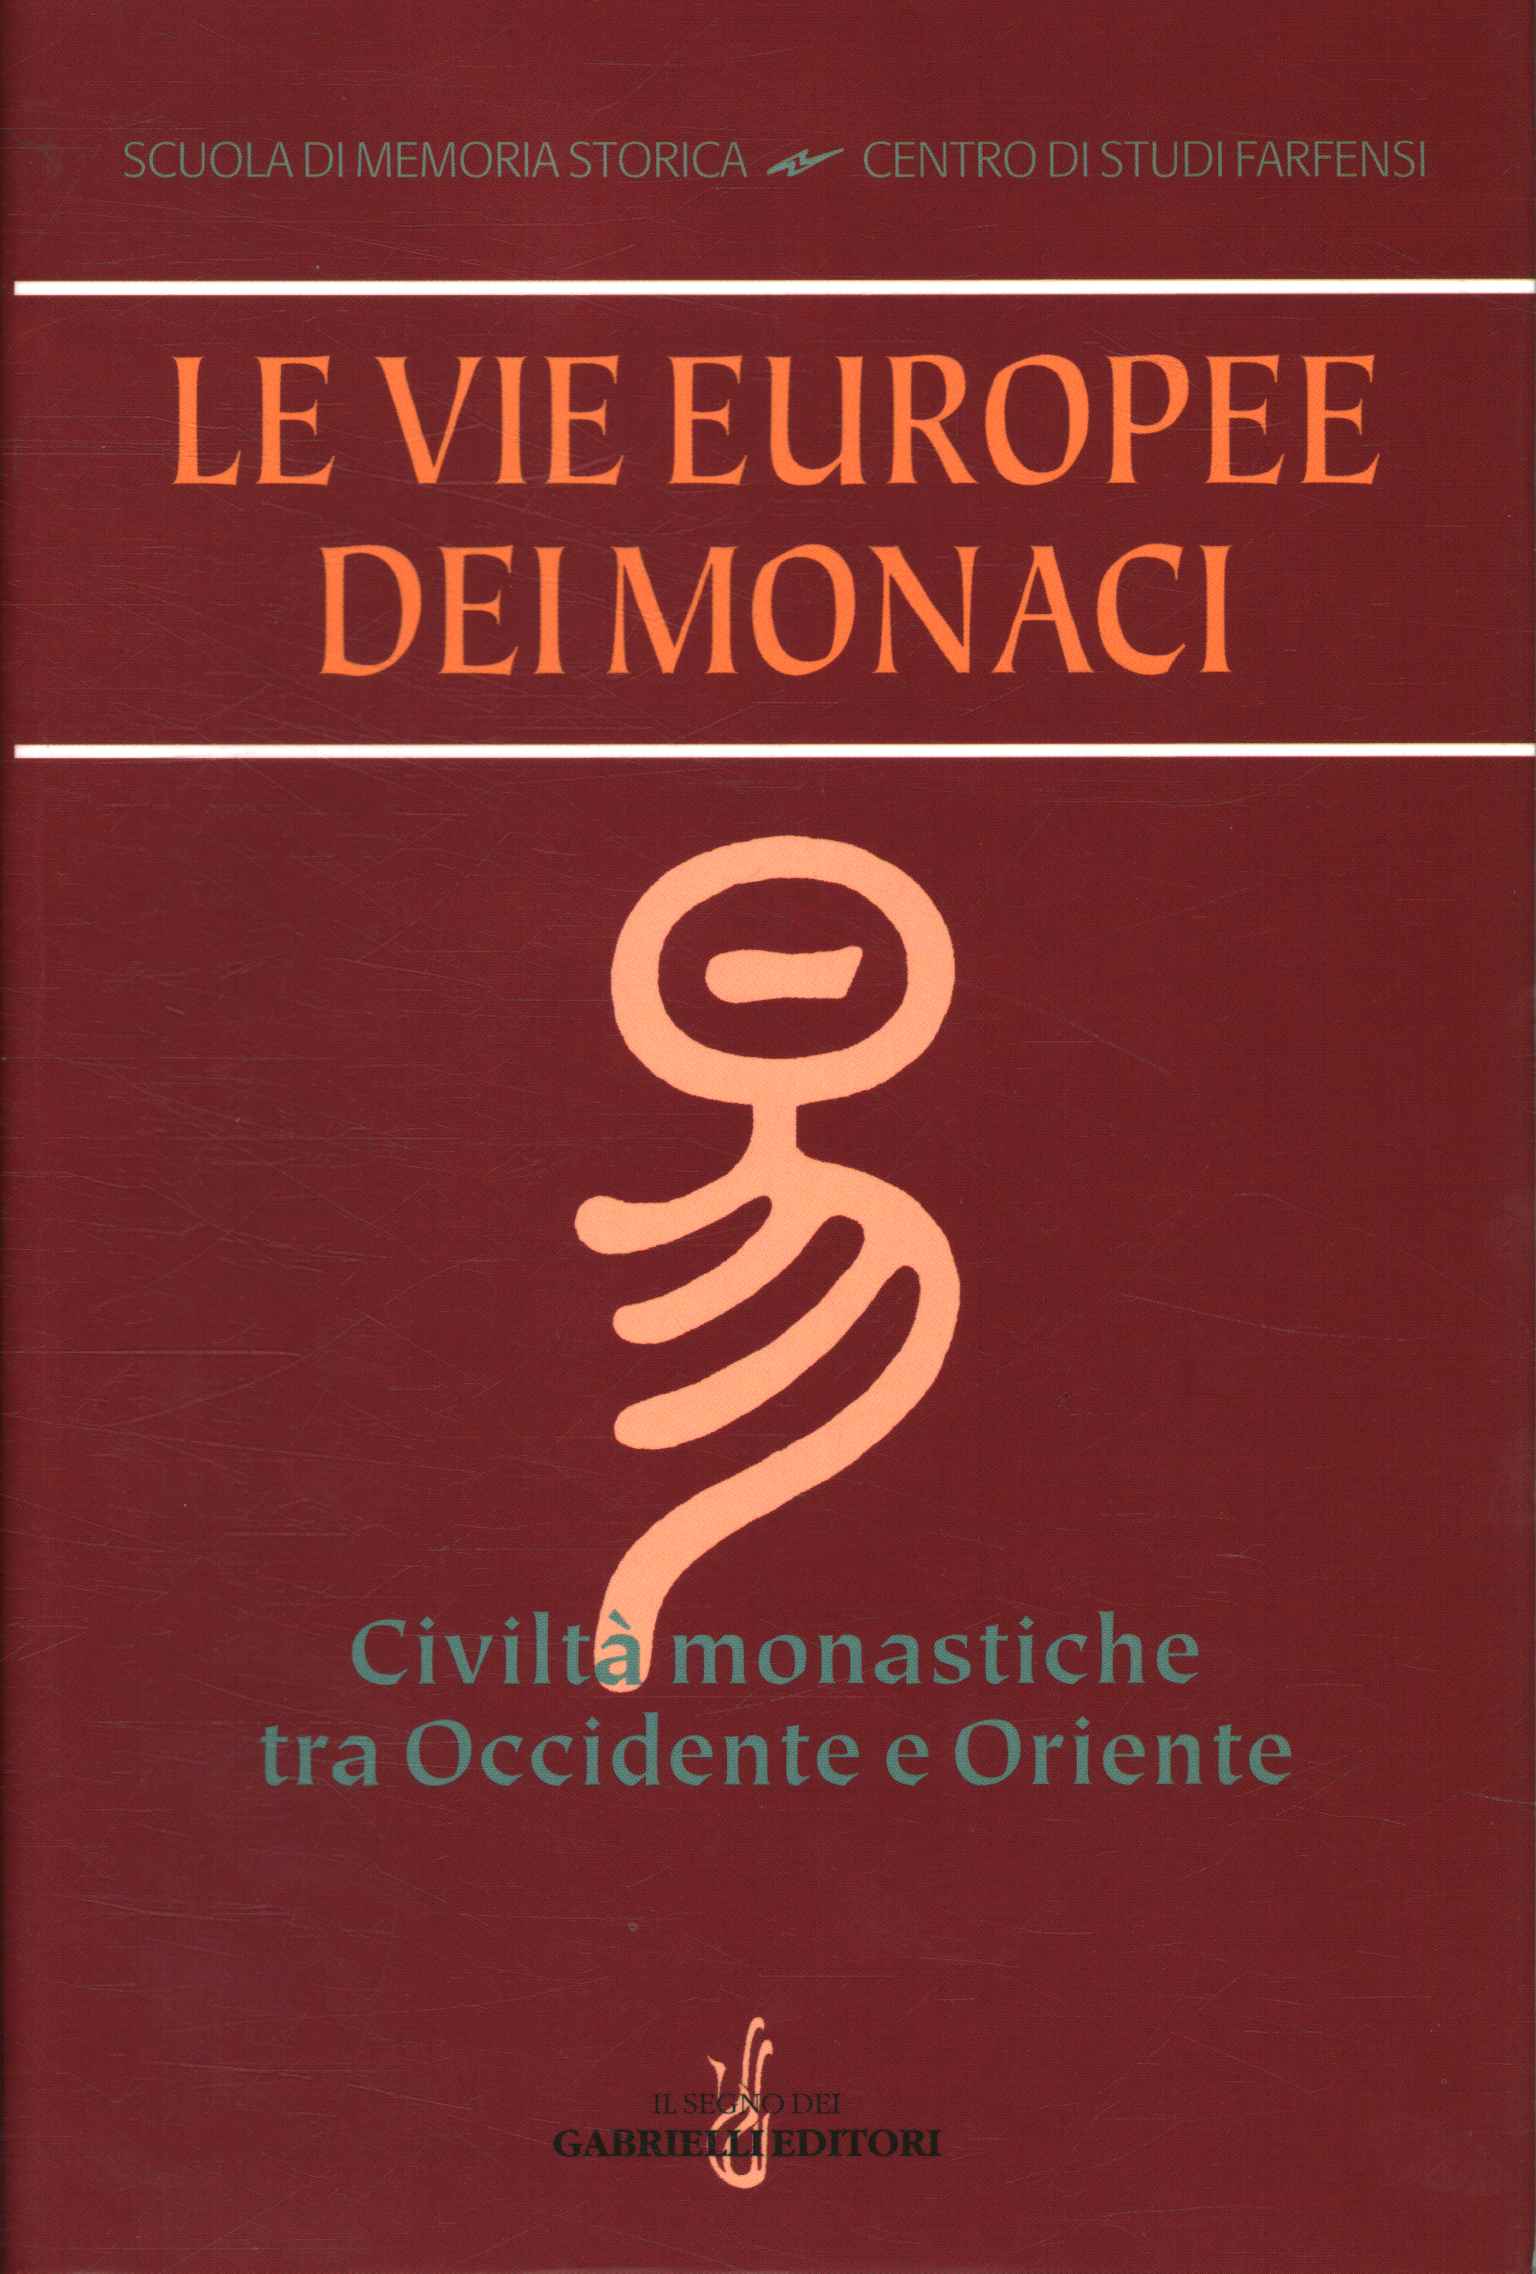 Las costumbres europeas de los monjes